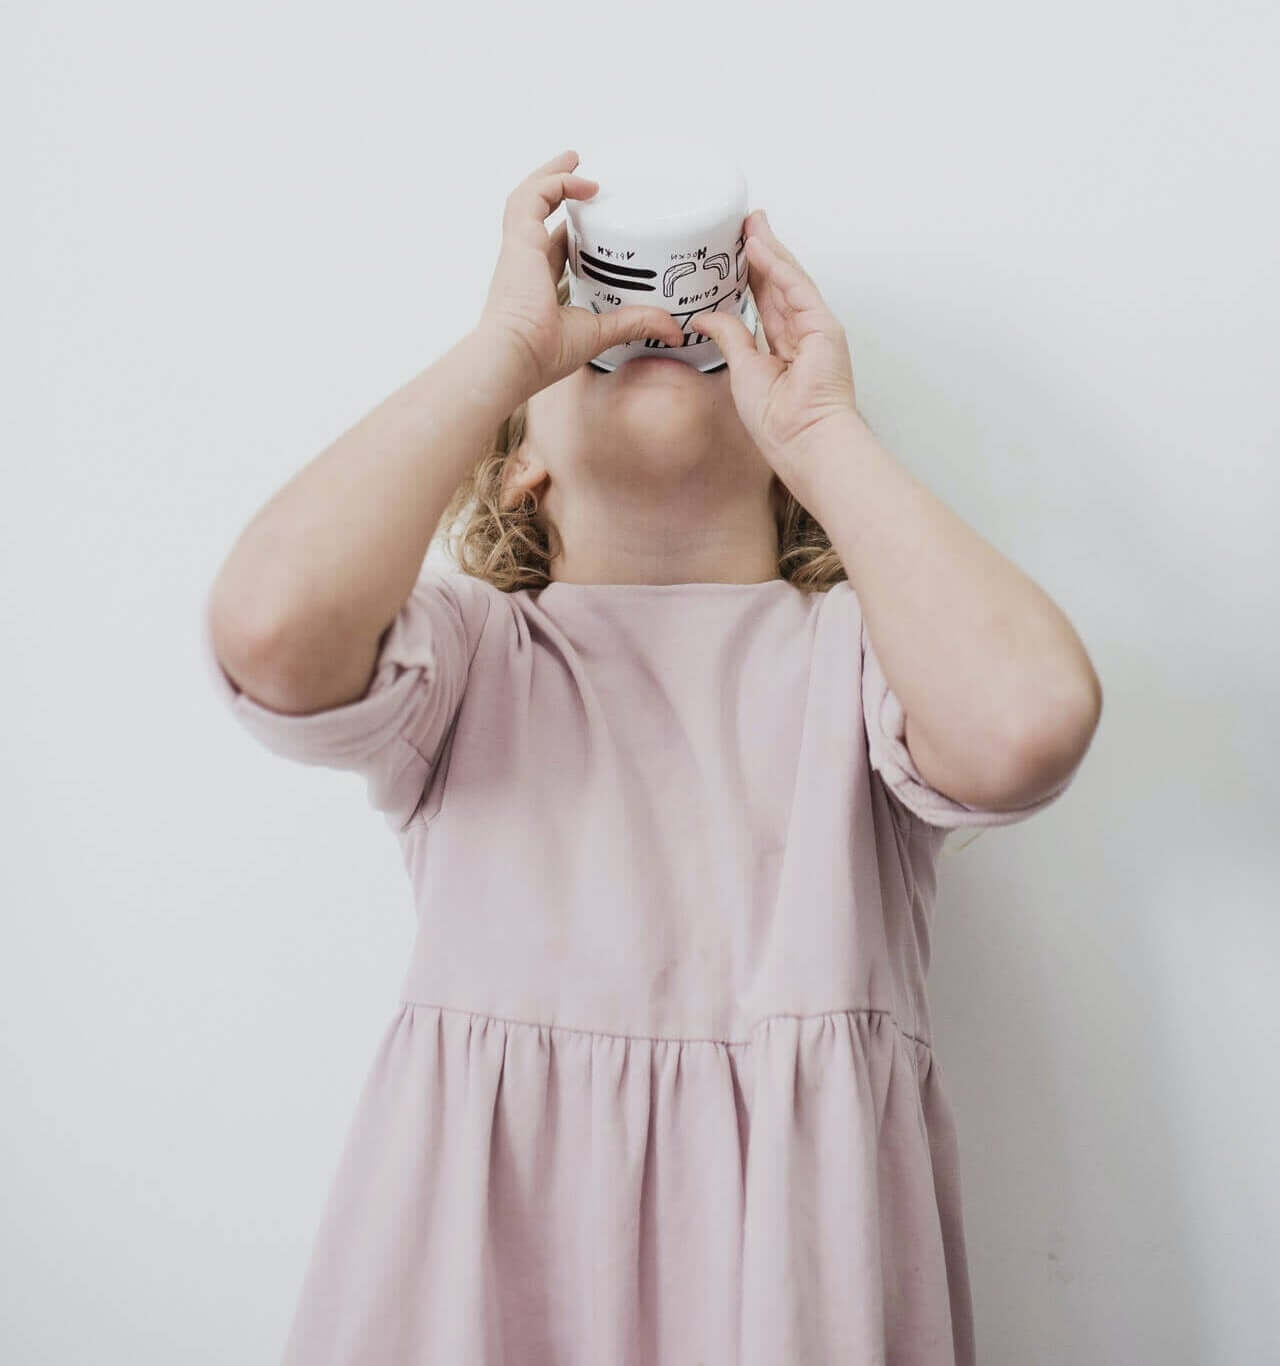 A young girl drinking yogurt.